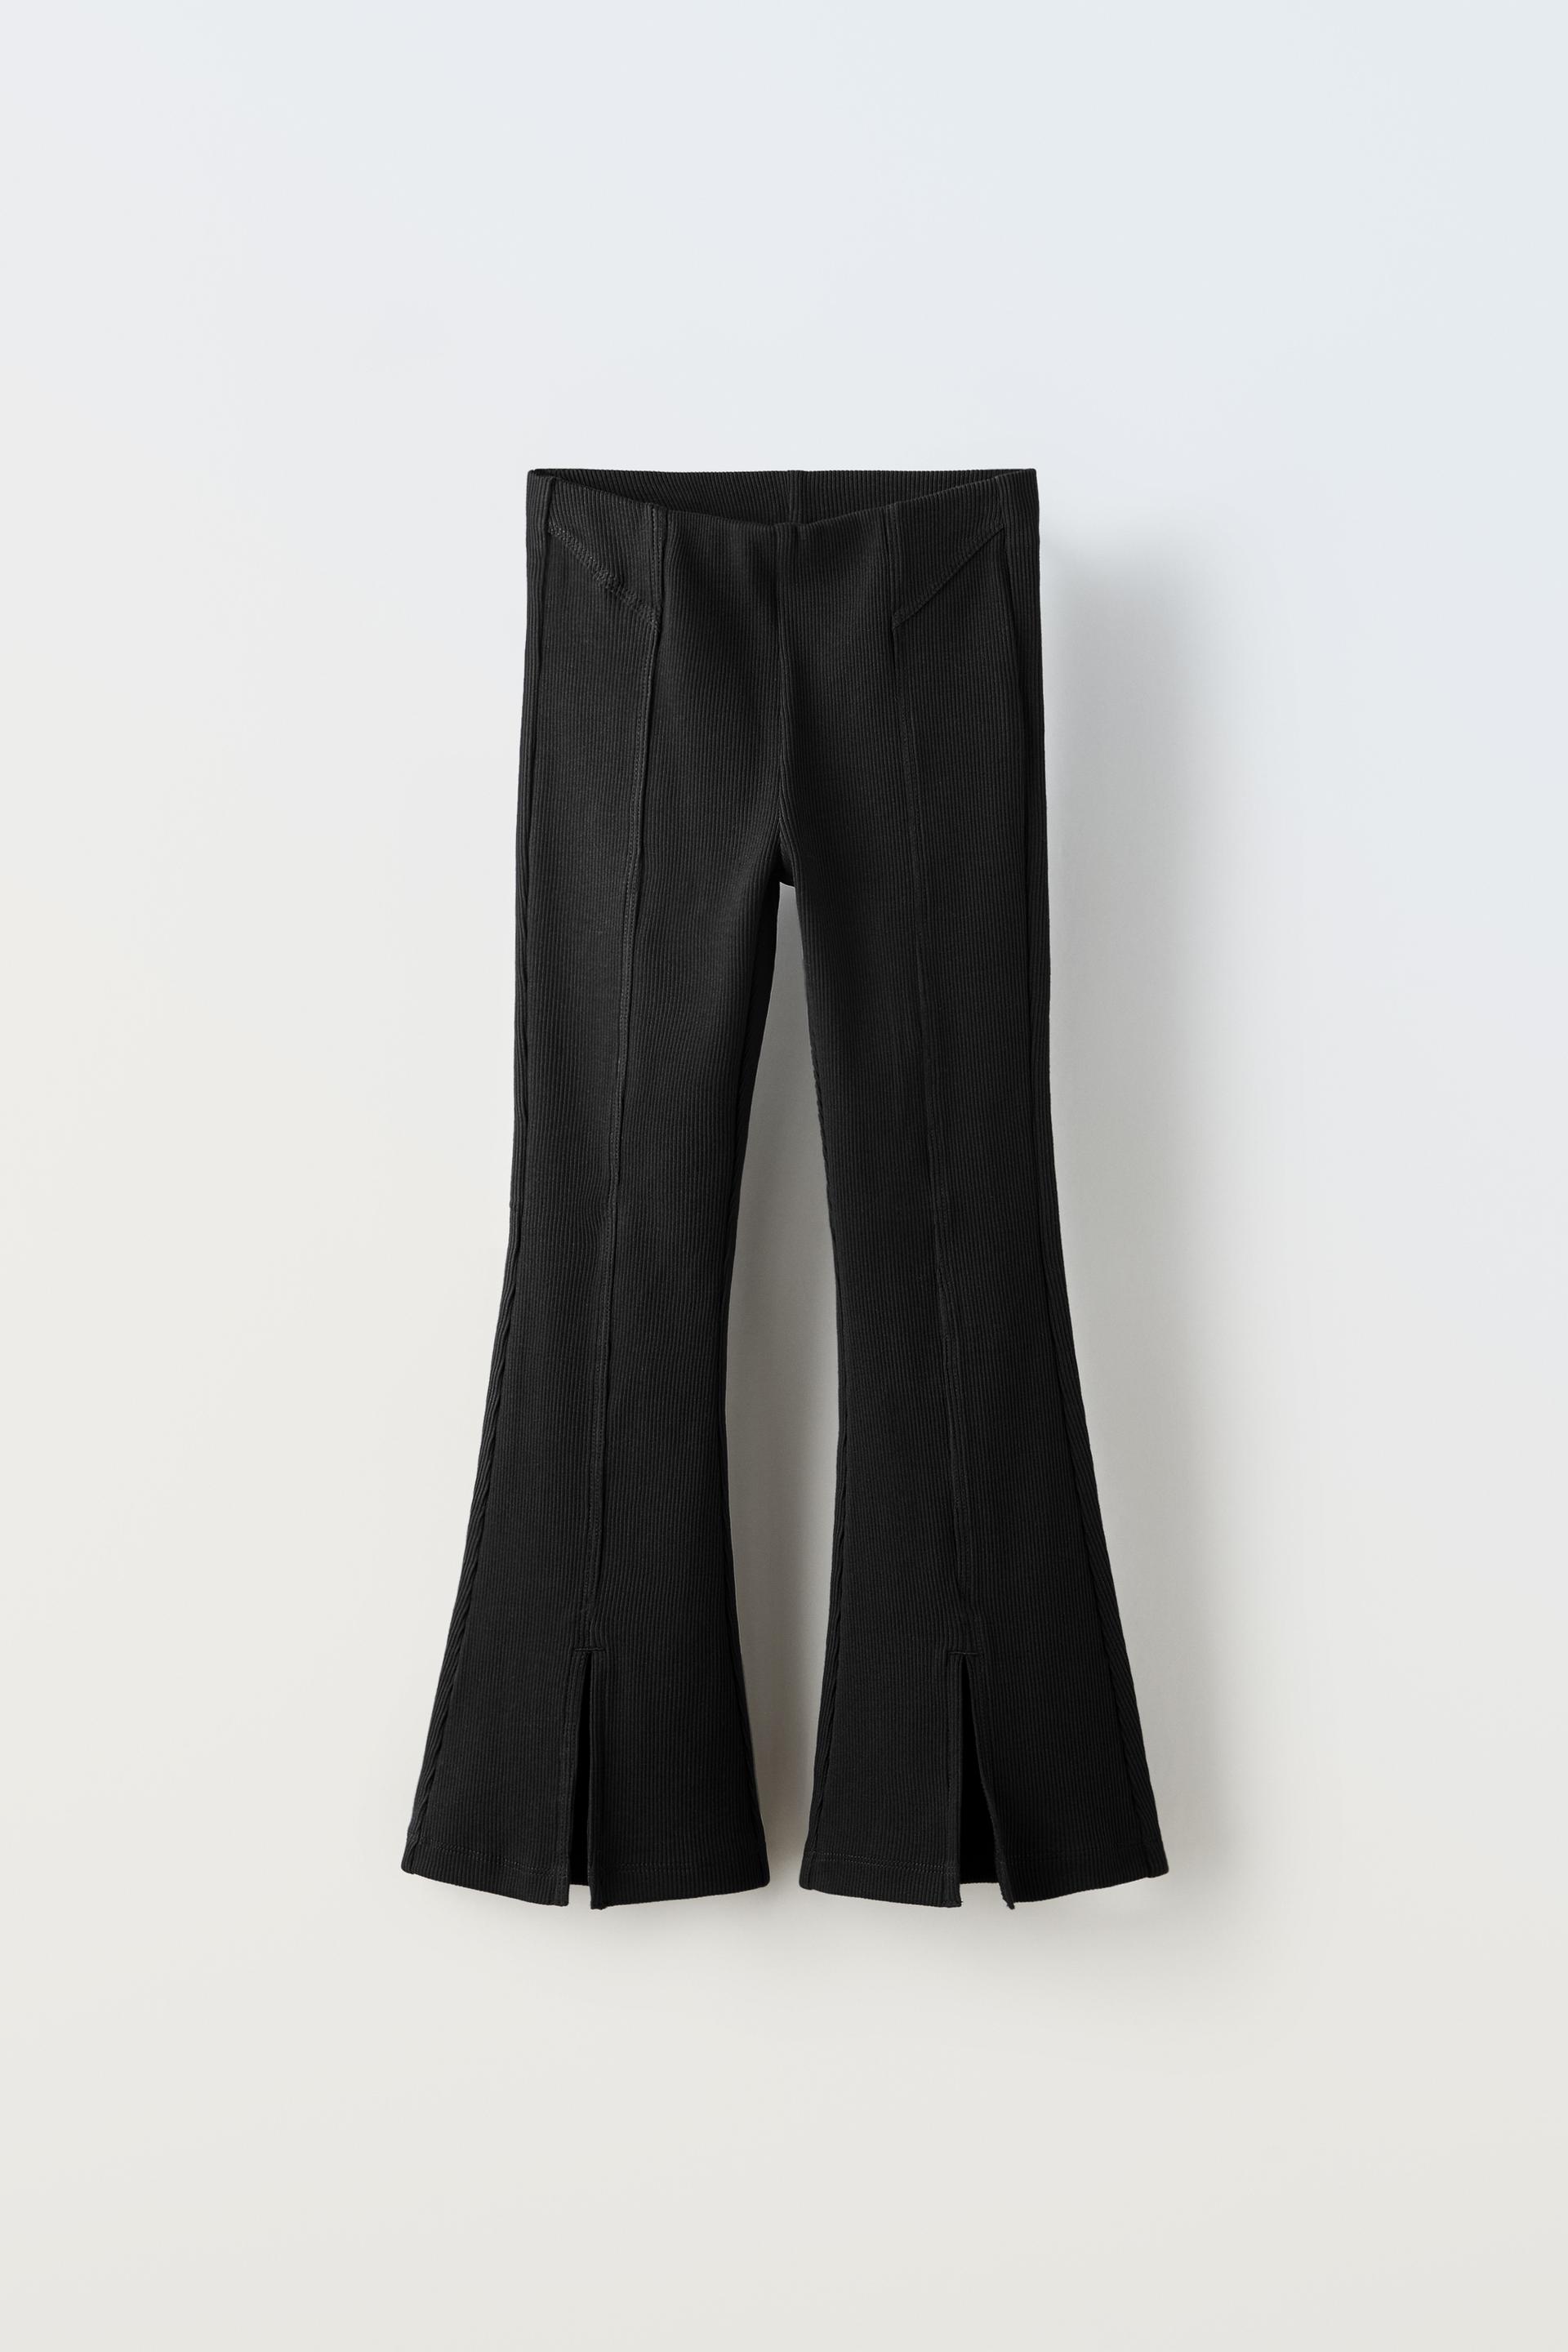 Zara, Pants & Jumpsuits, Zara Slit Ribbed Legging Pant Small S Cream Ecru